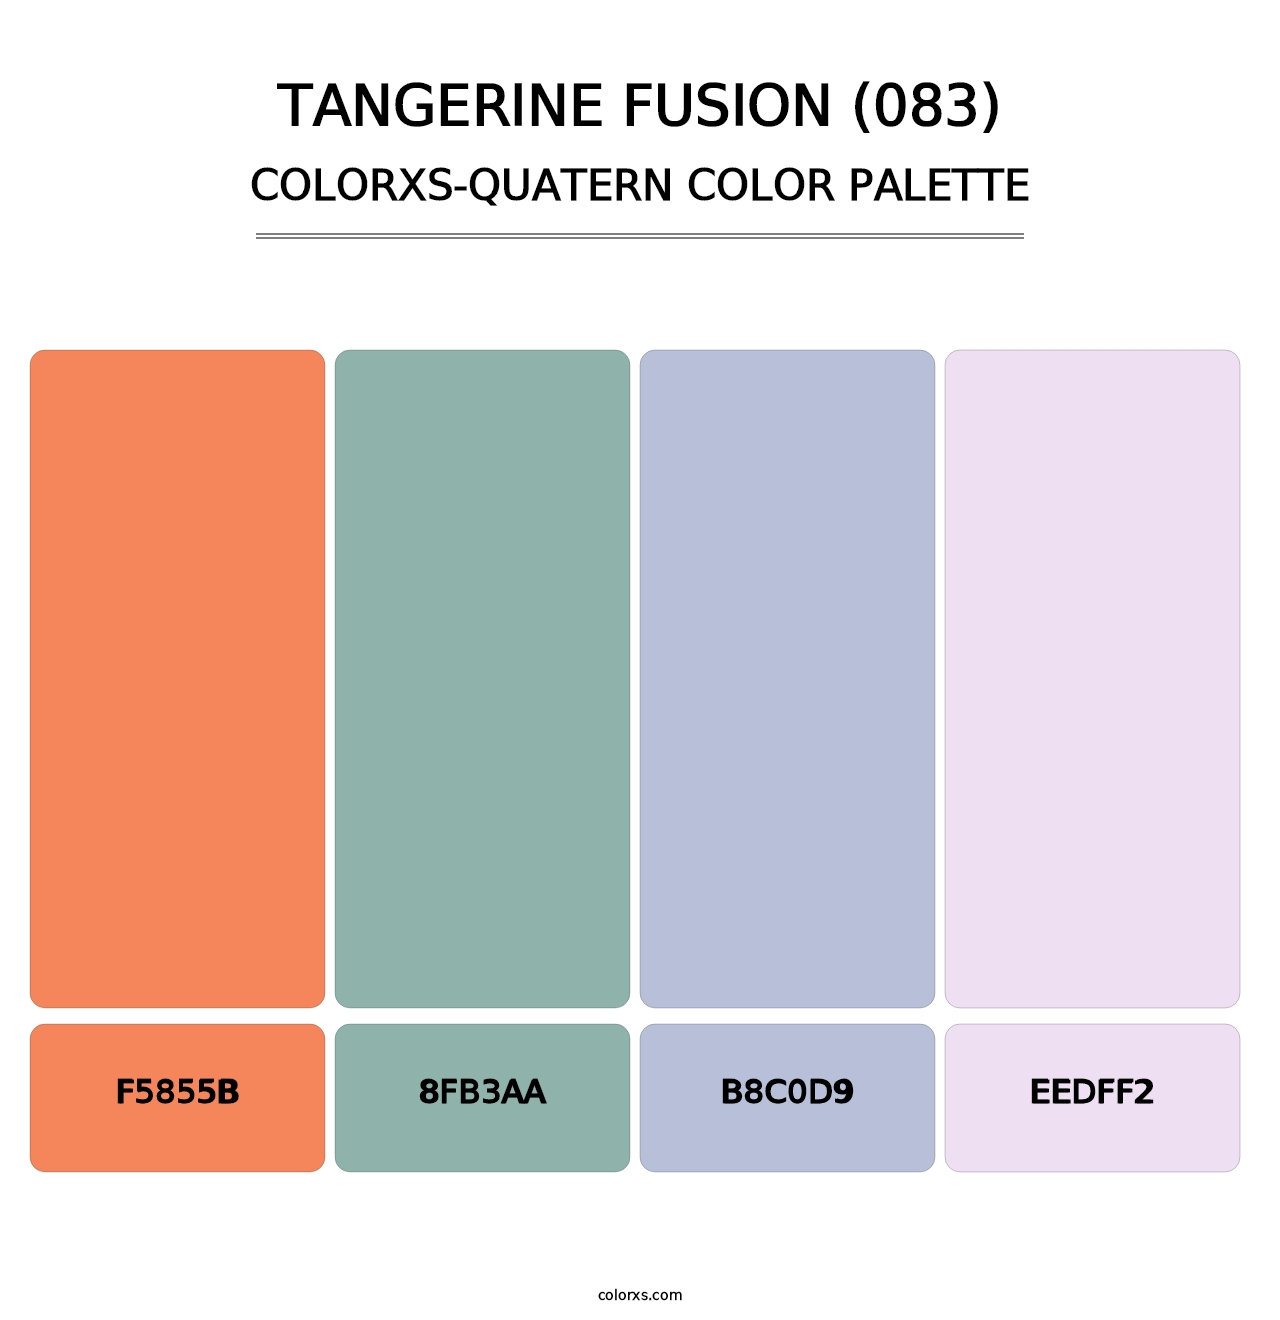 Tangerine Fusion (083) - Colorxs Quatern Palette